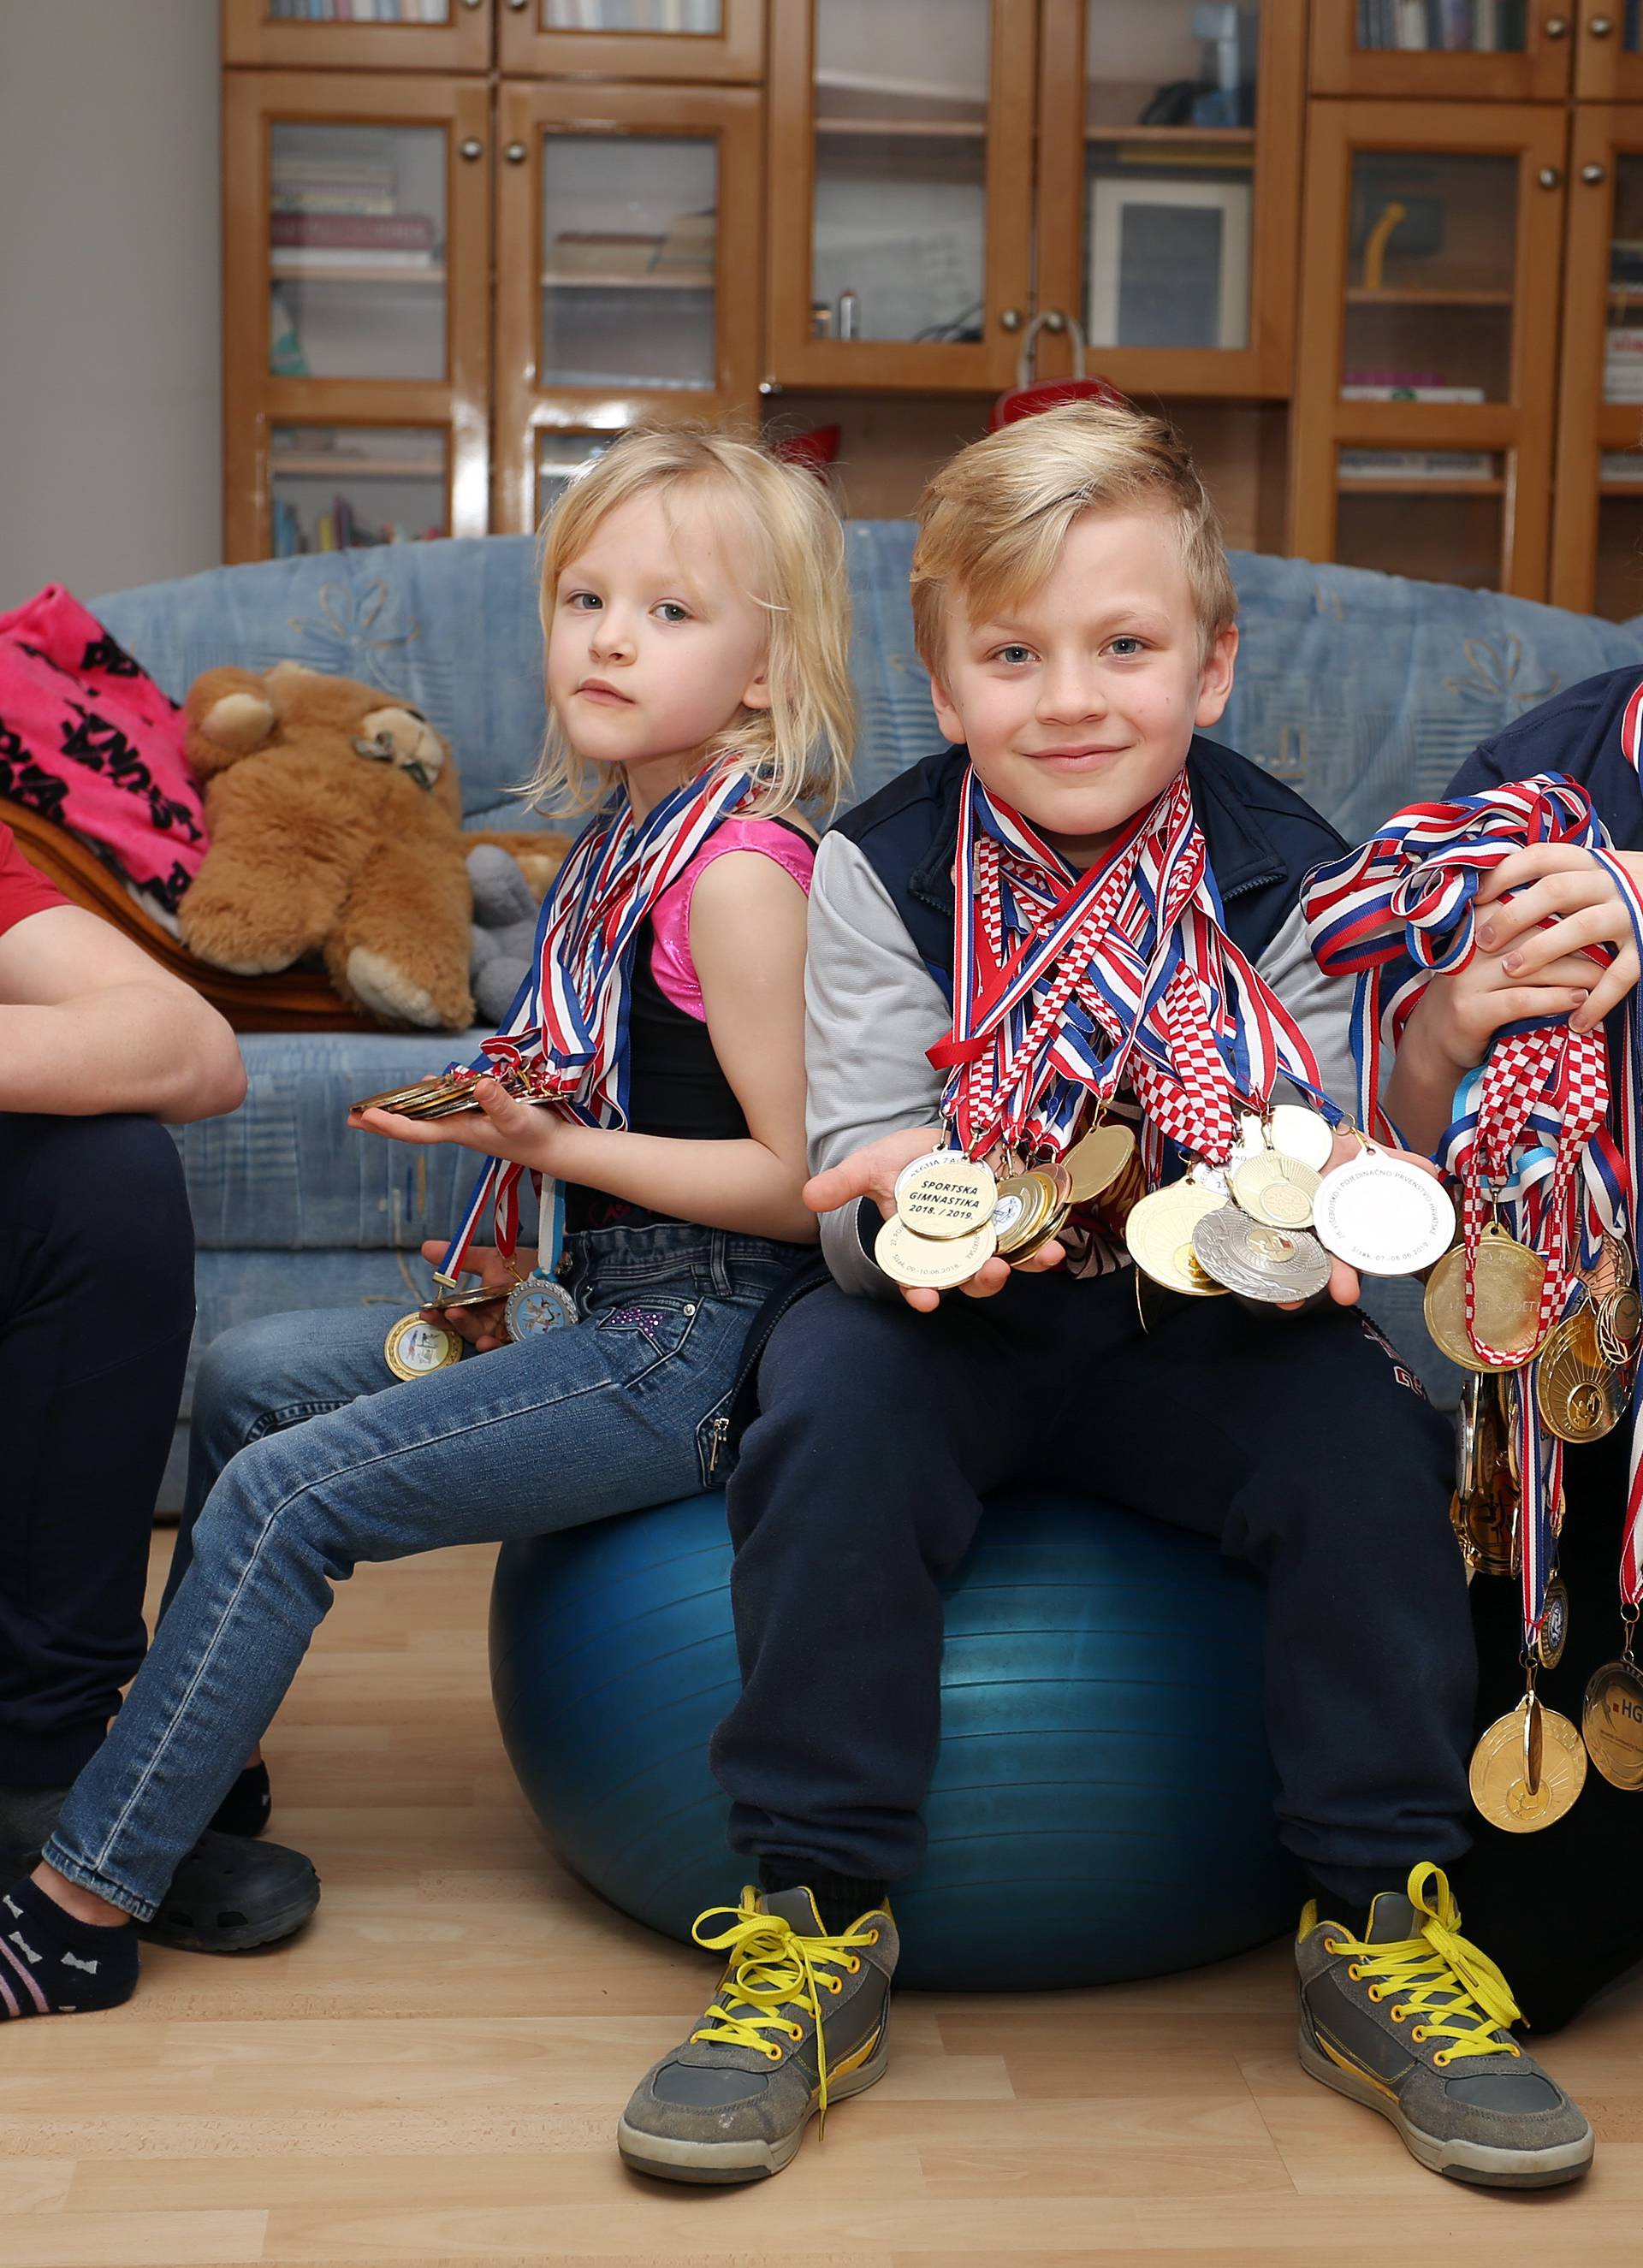 Obitelj sa 100 medalja: 'Nismo propustili niti jedan trening...'